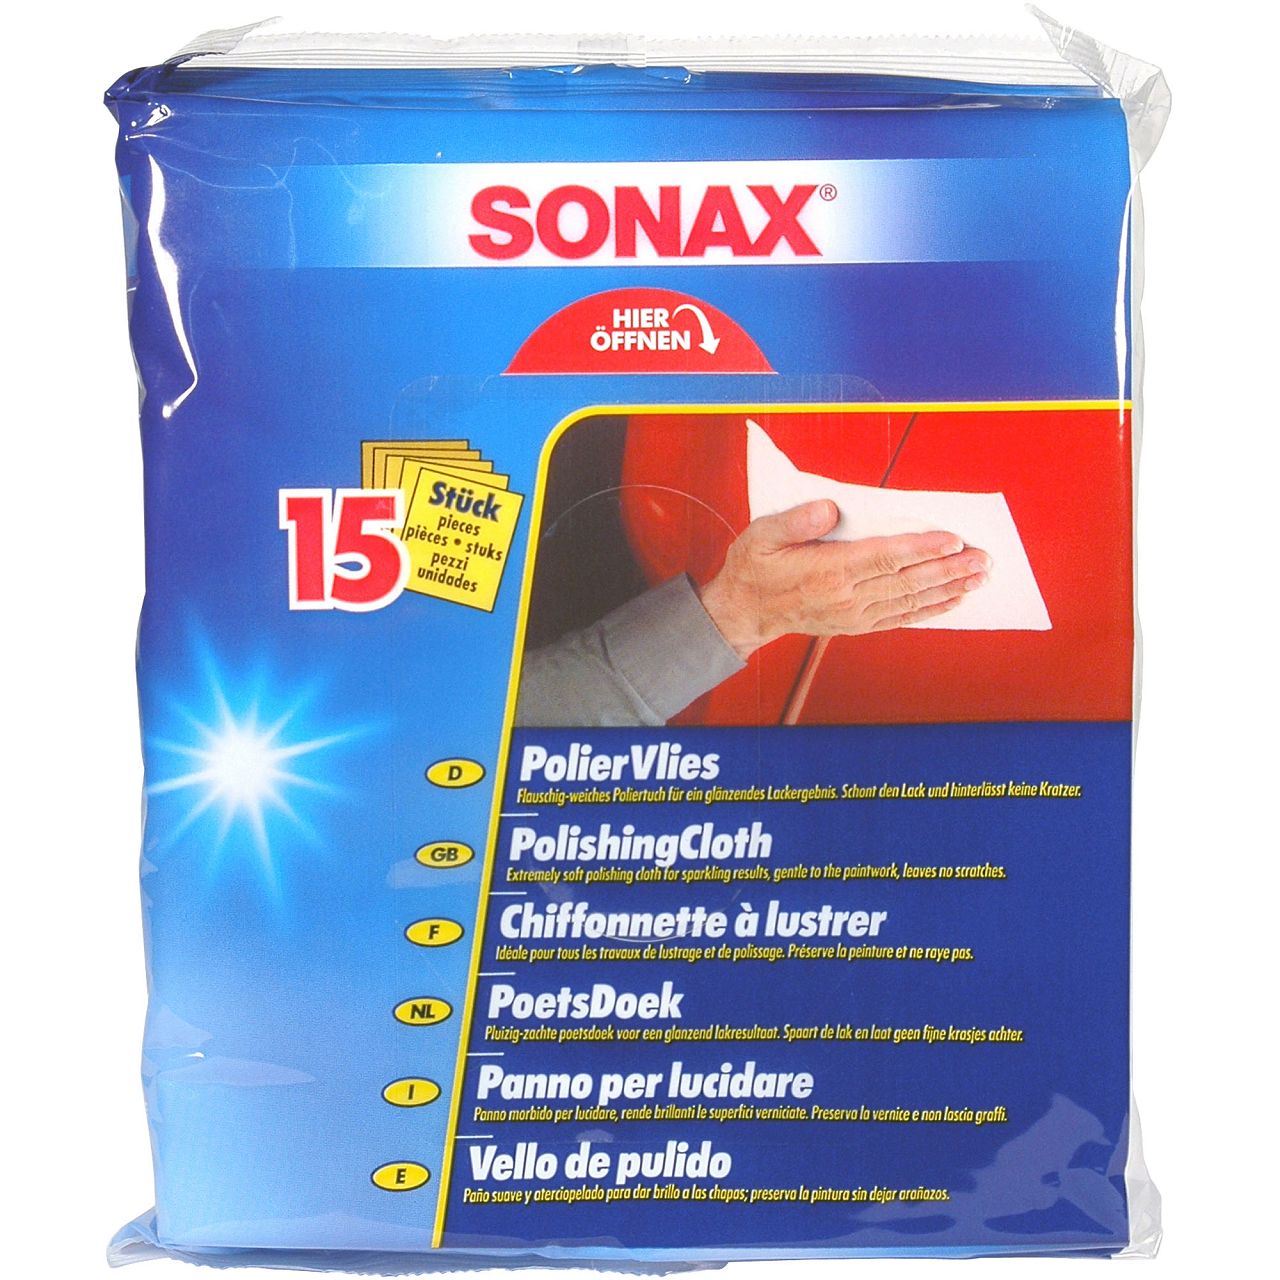 15x SONAX PolierVlies Vliestücher Trockentuch Wischtuch Putztuch 20x24,7cm